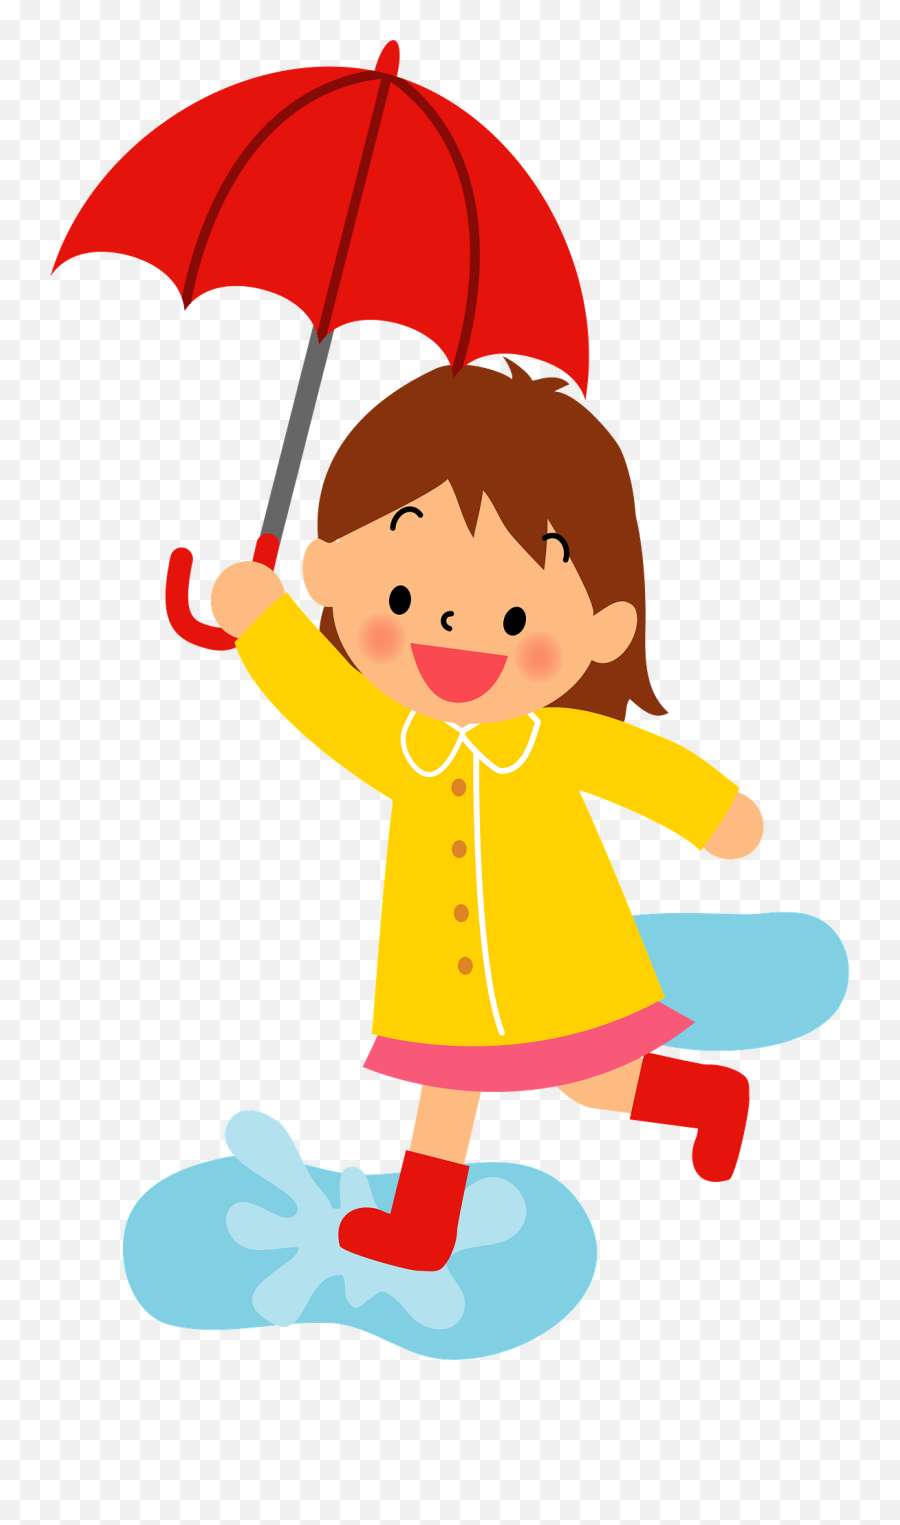 Silhouette Ballerina Holding An Umbrella - Child With Umbrella Cartoon Emoji,Rain Clipart